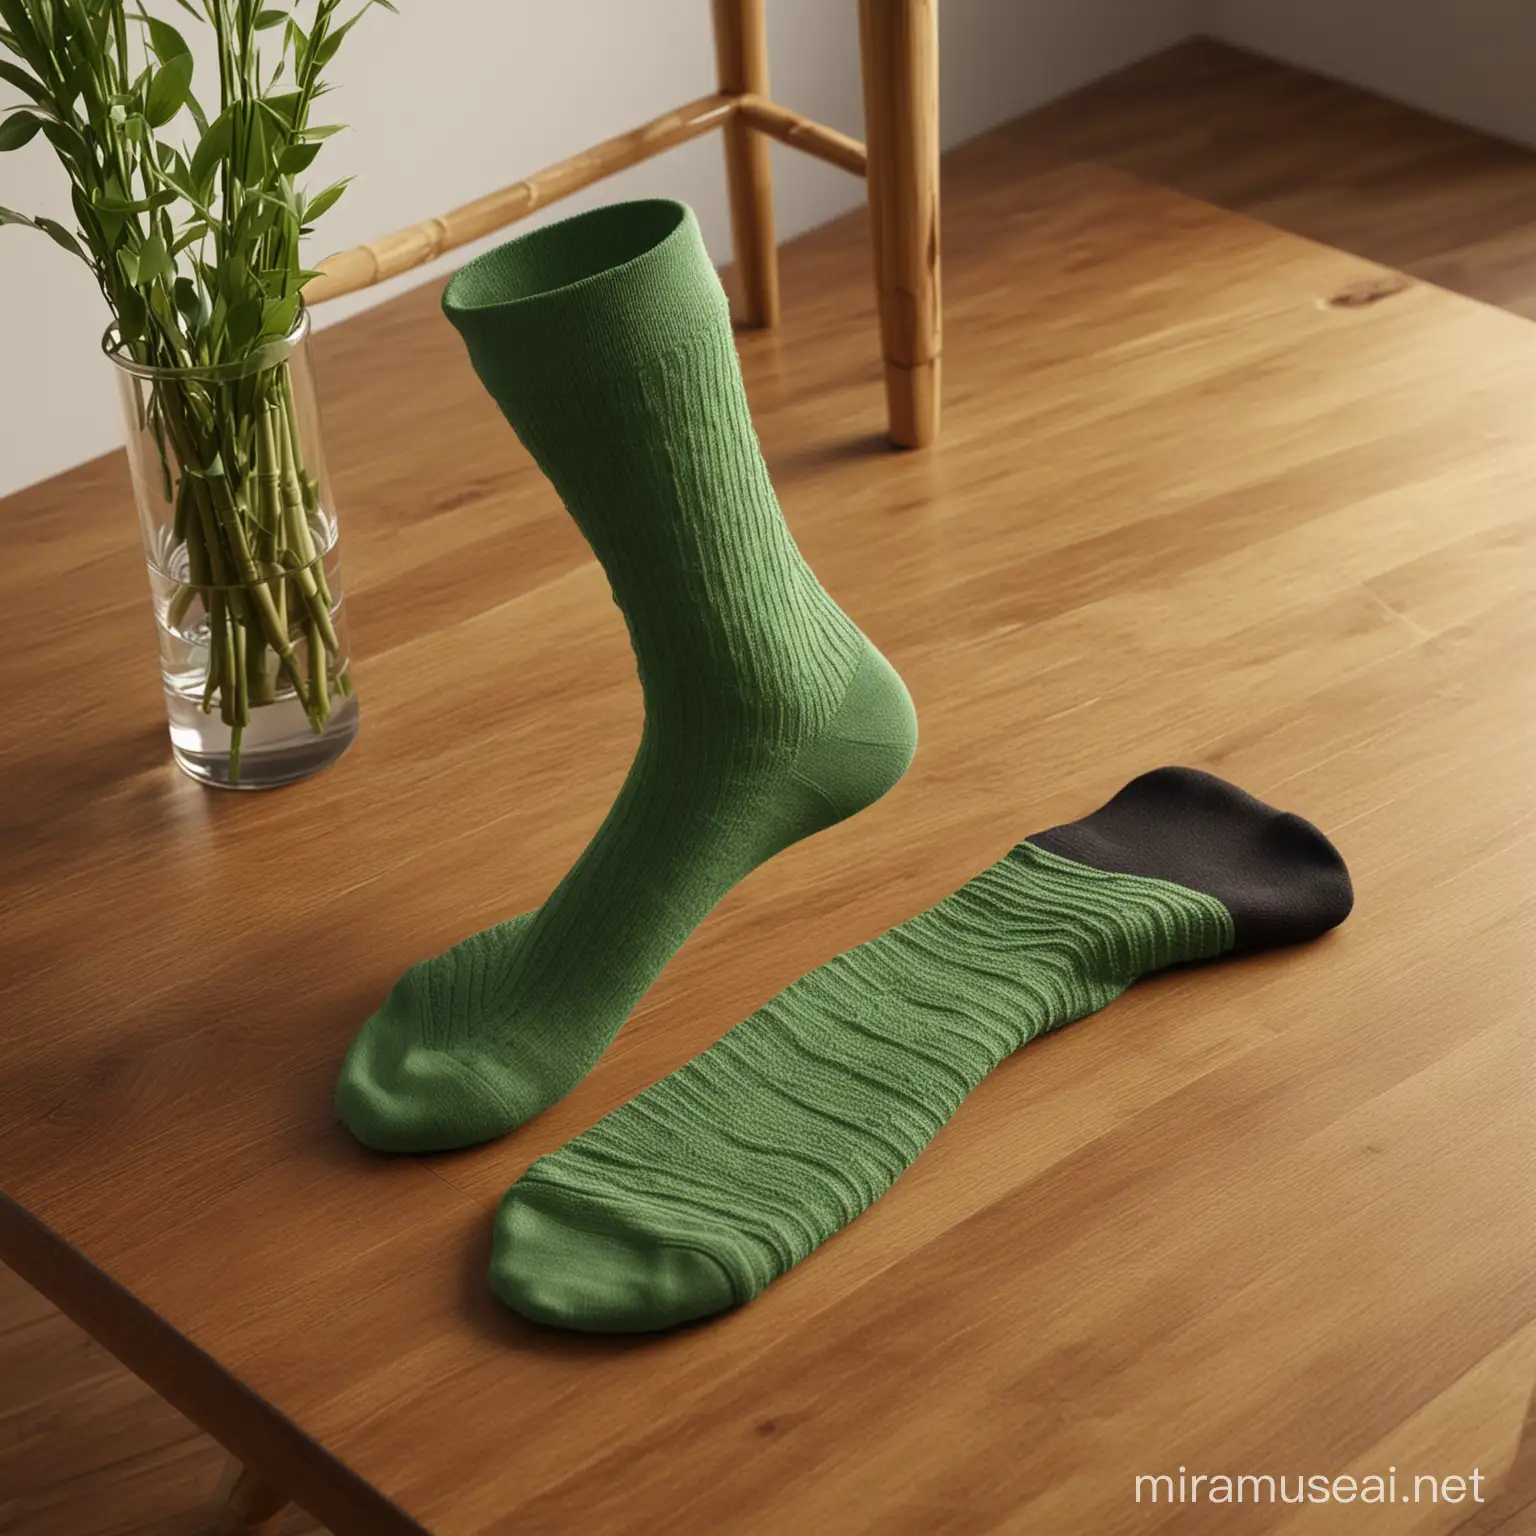 EcoFriendly Bamboo Sock Display Stylish Arrangement on Sustainable Table